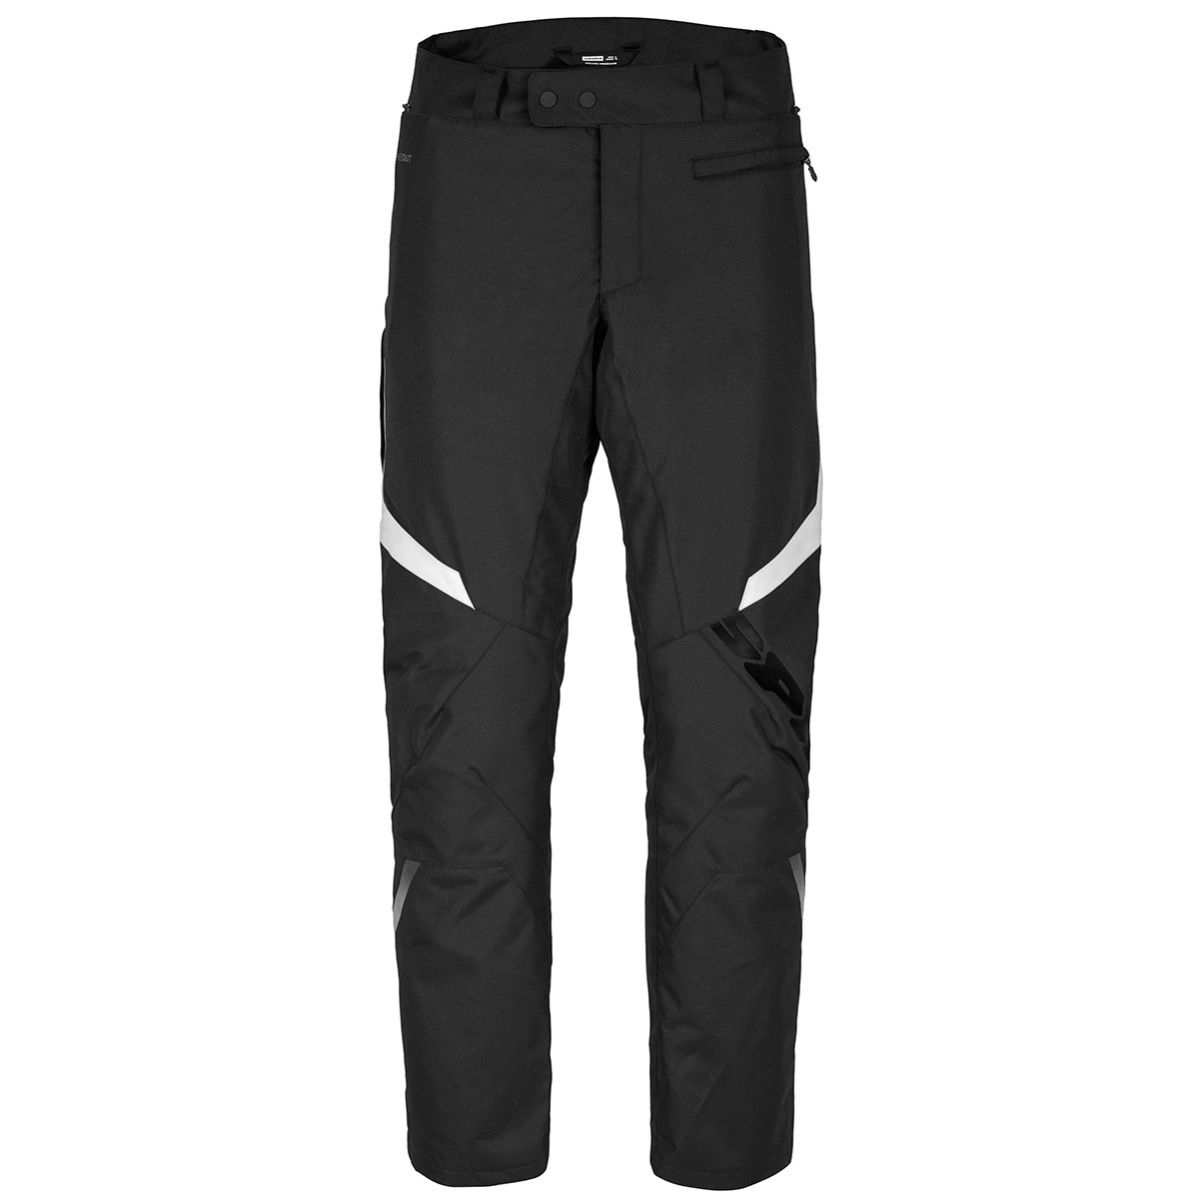 Image of Spidi Sportmaster Pants Black White Size M EN